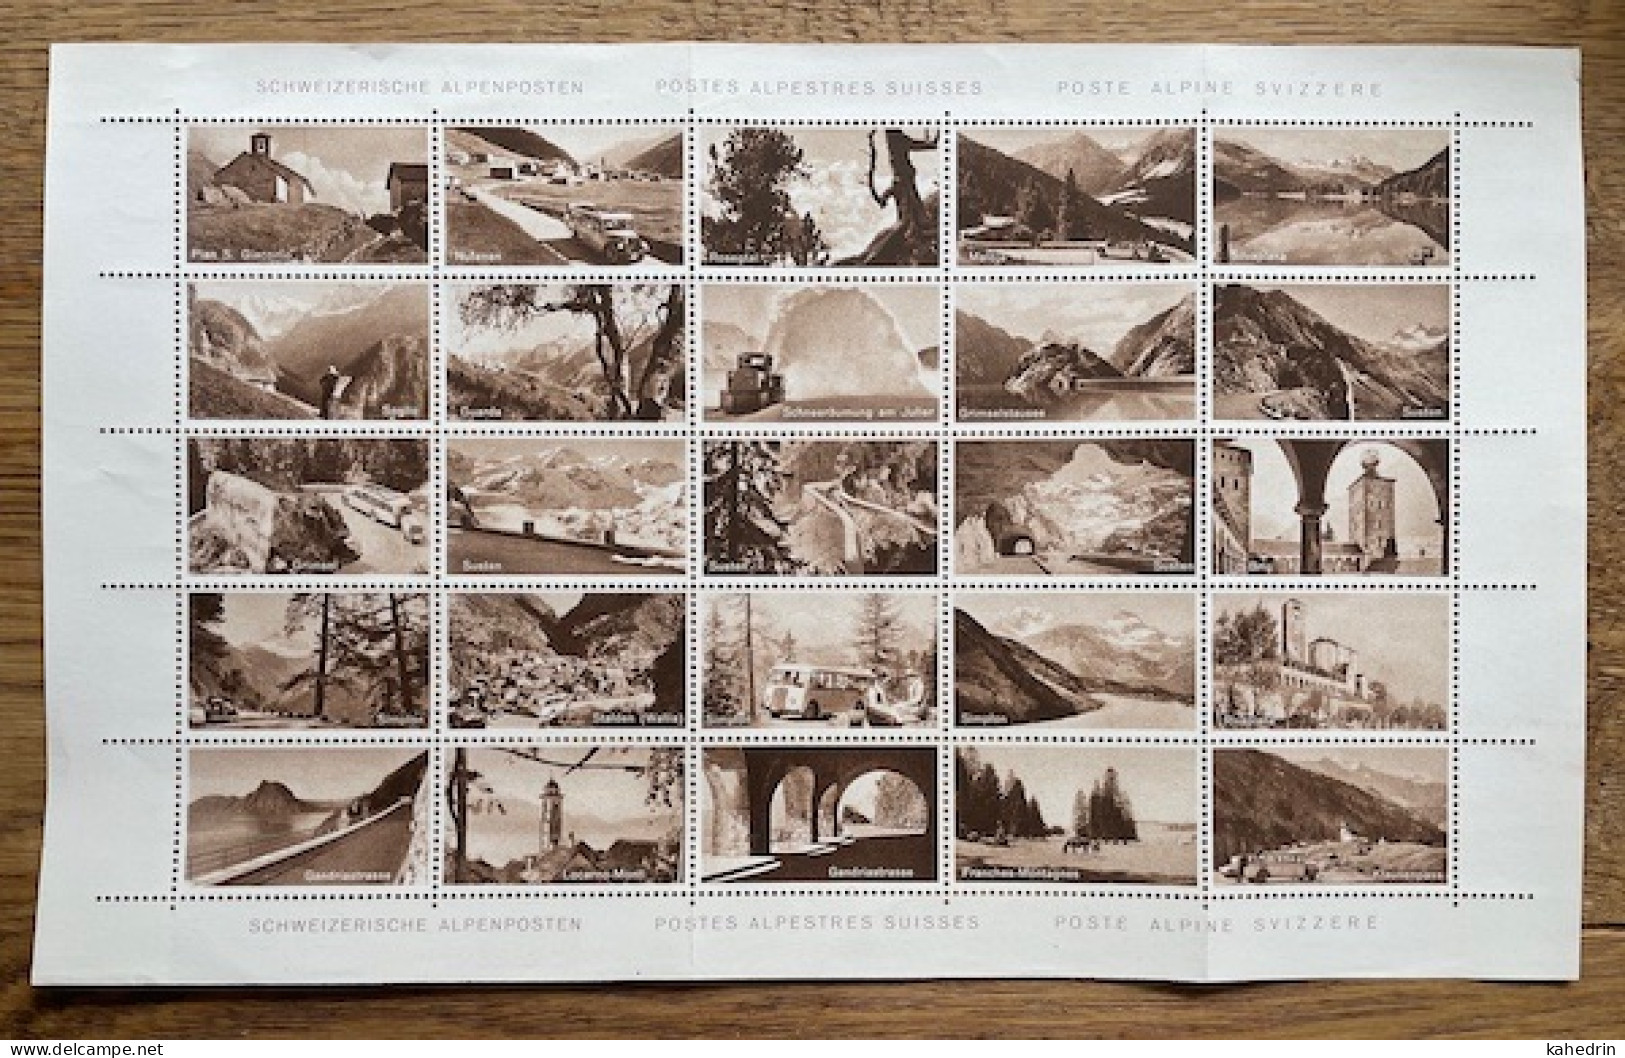 Schweiz Helvetia Swiss Suisse, Revenues / Cinderella, Landscape, Alpenposten - Poste Alpine **, MNH, Complete Sheet - Lotes/Colecciones